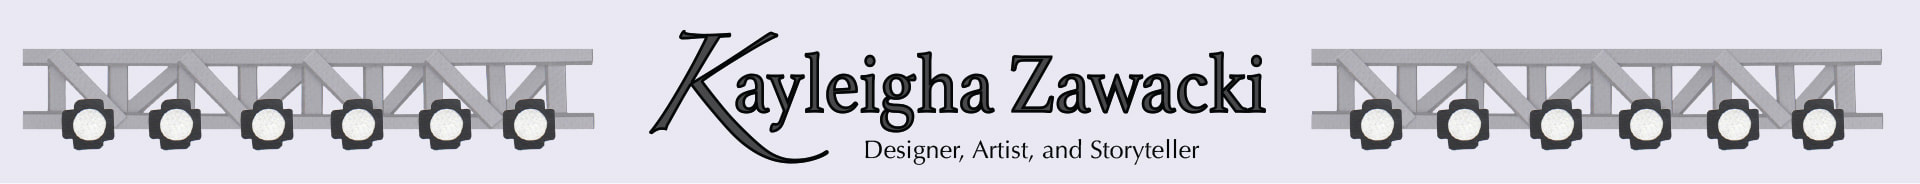 Kayleigha Zawacki - Designer, Artist, Storyteller